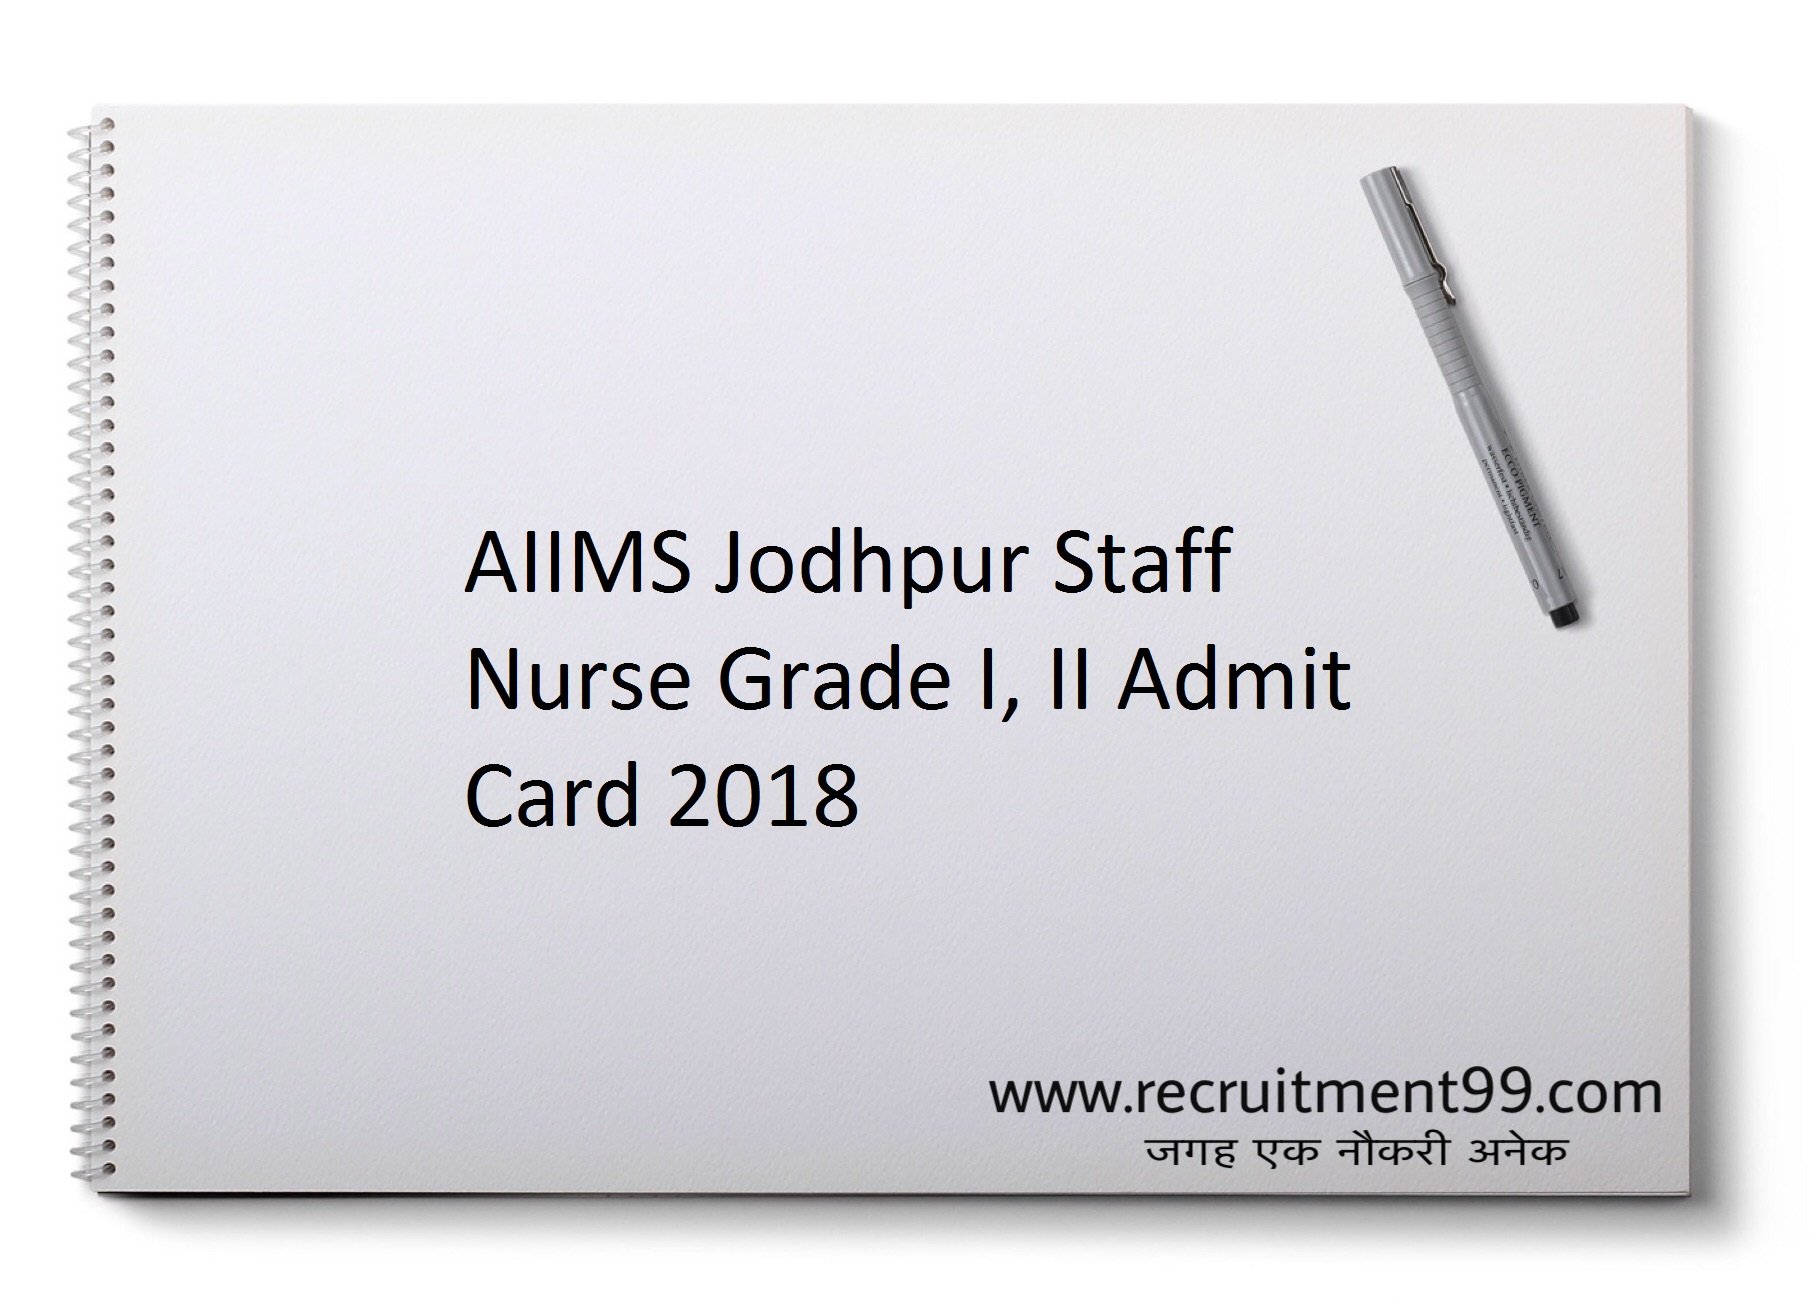 AIIMS Jodhpur Staff Nurse Grade I, II Admit Card 2018